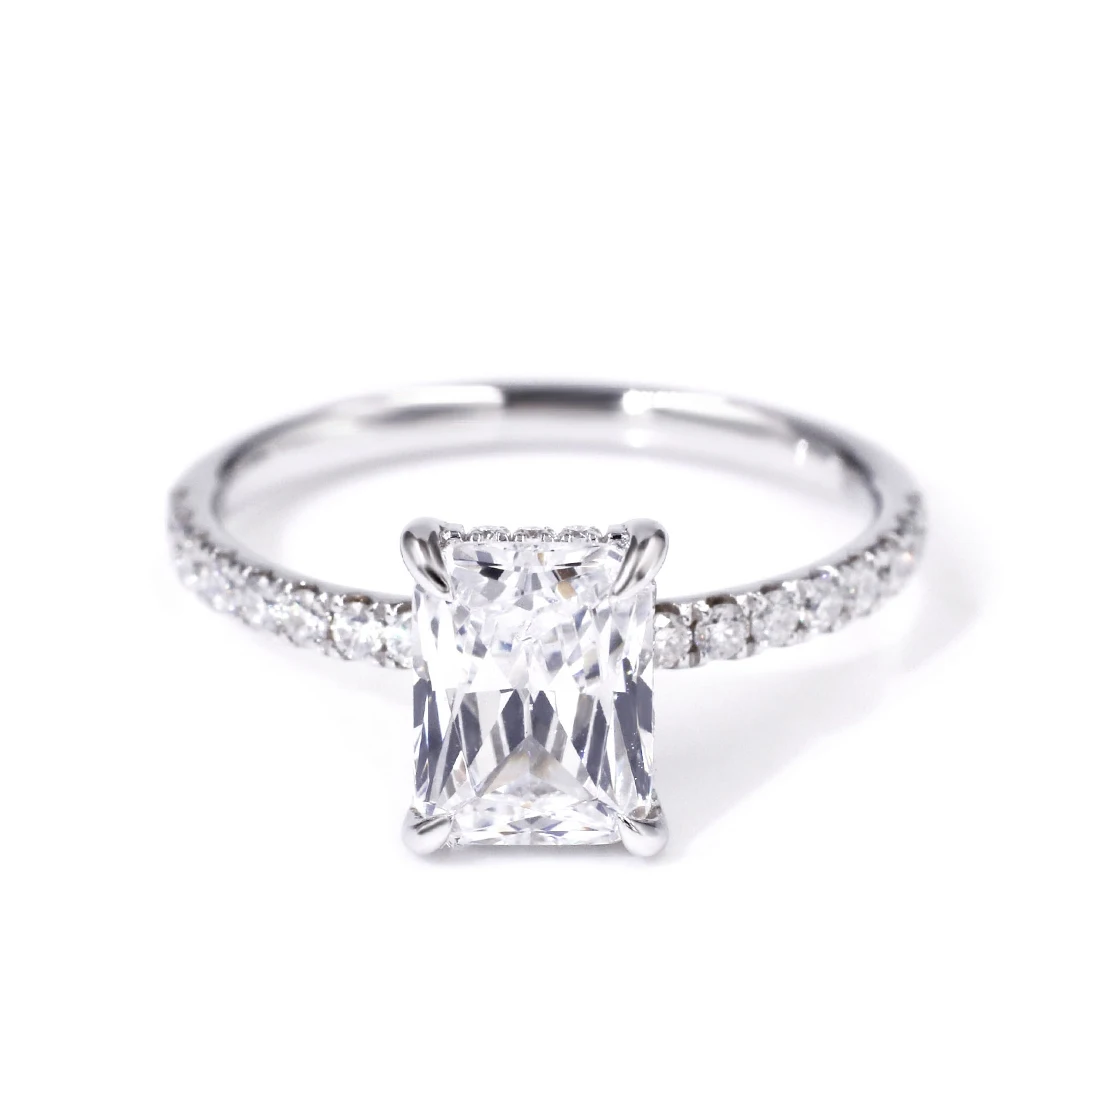 

Tianyu gems colorless emerald cut white cubic zircon moissanite ring gemstone 14k white solid gold women jewelry wedding ring